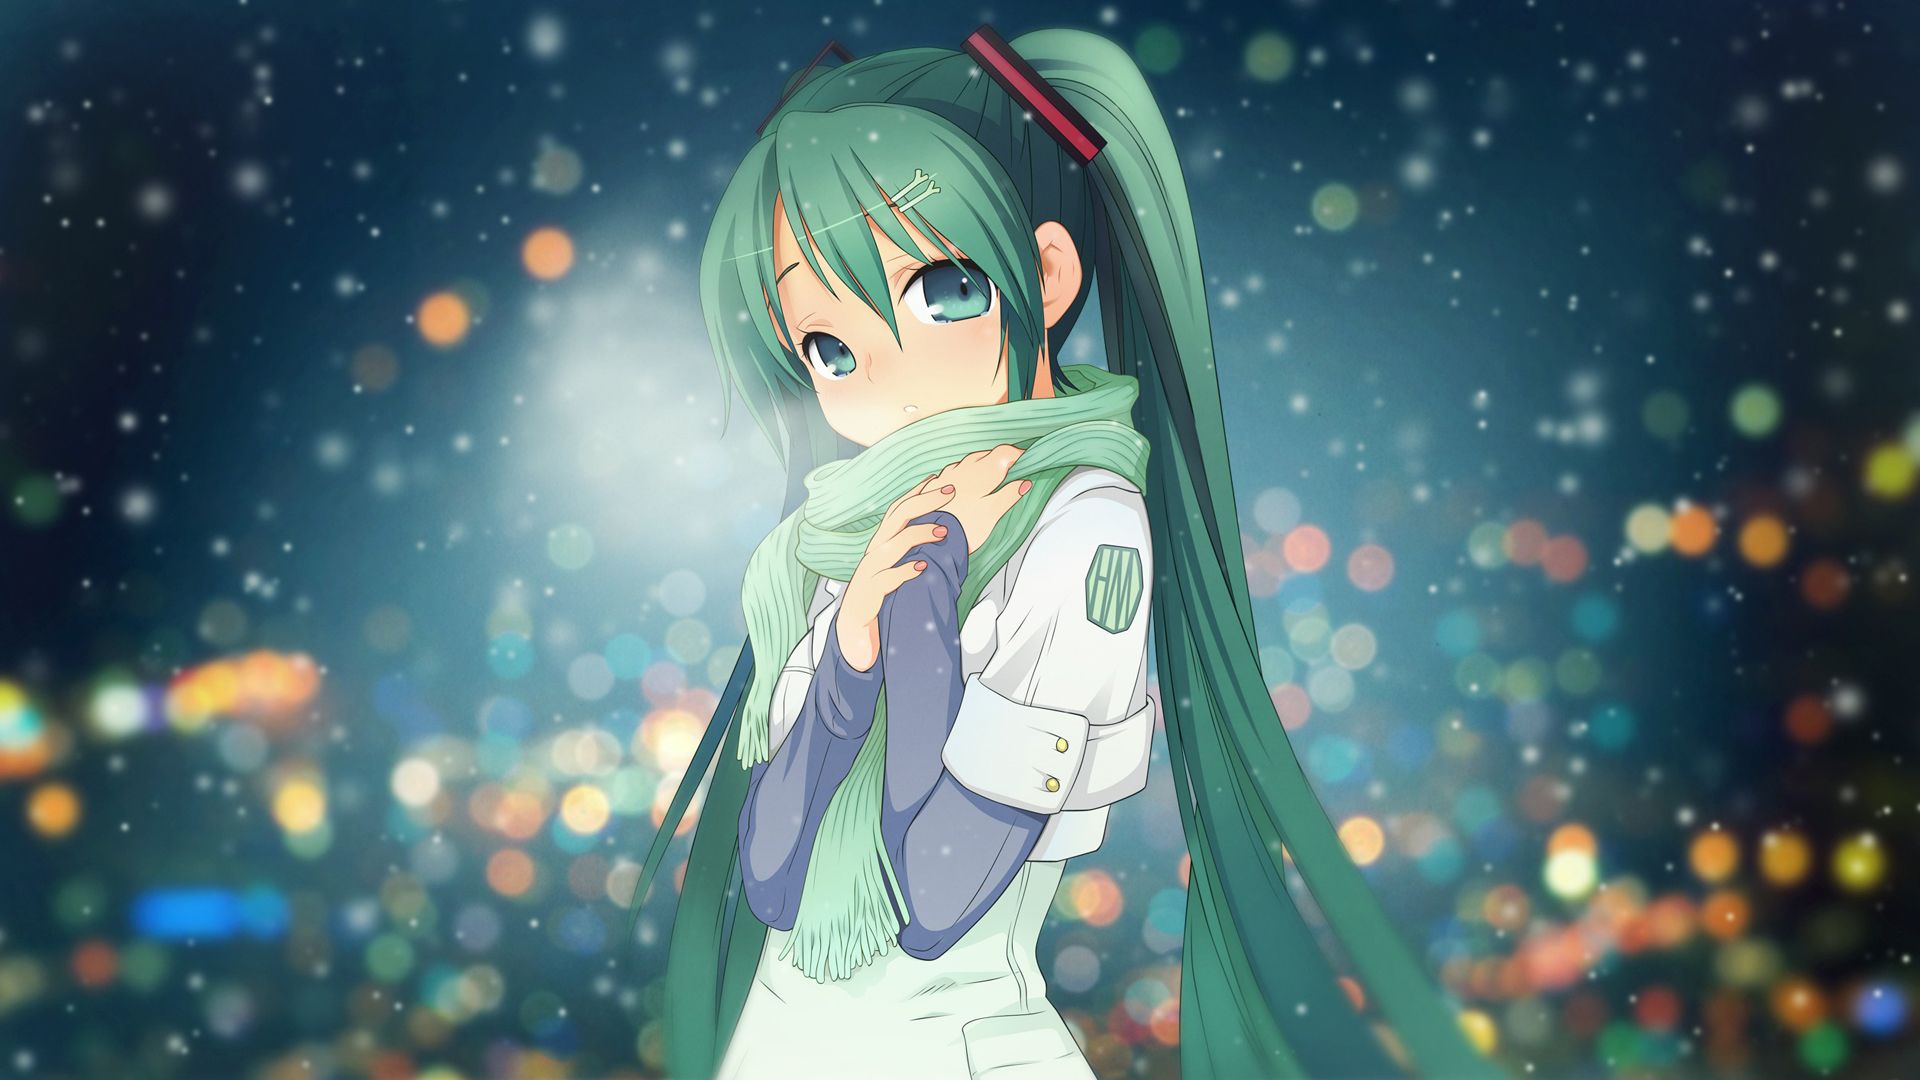 Anime Girl with Green Hair